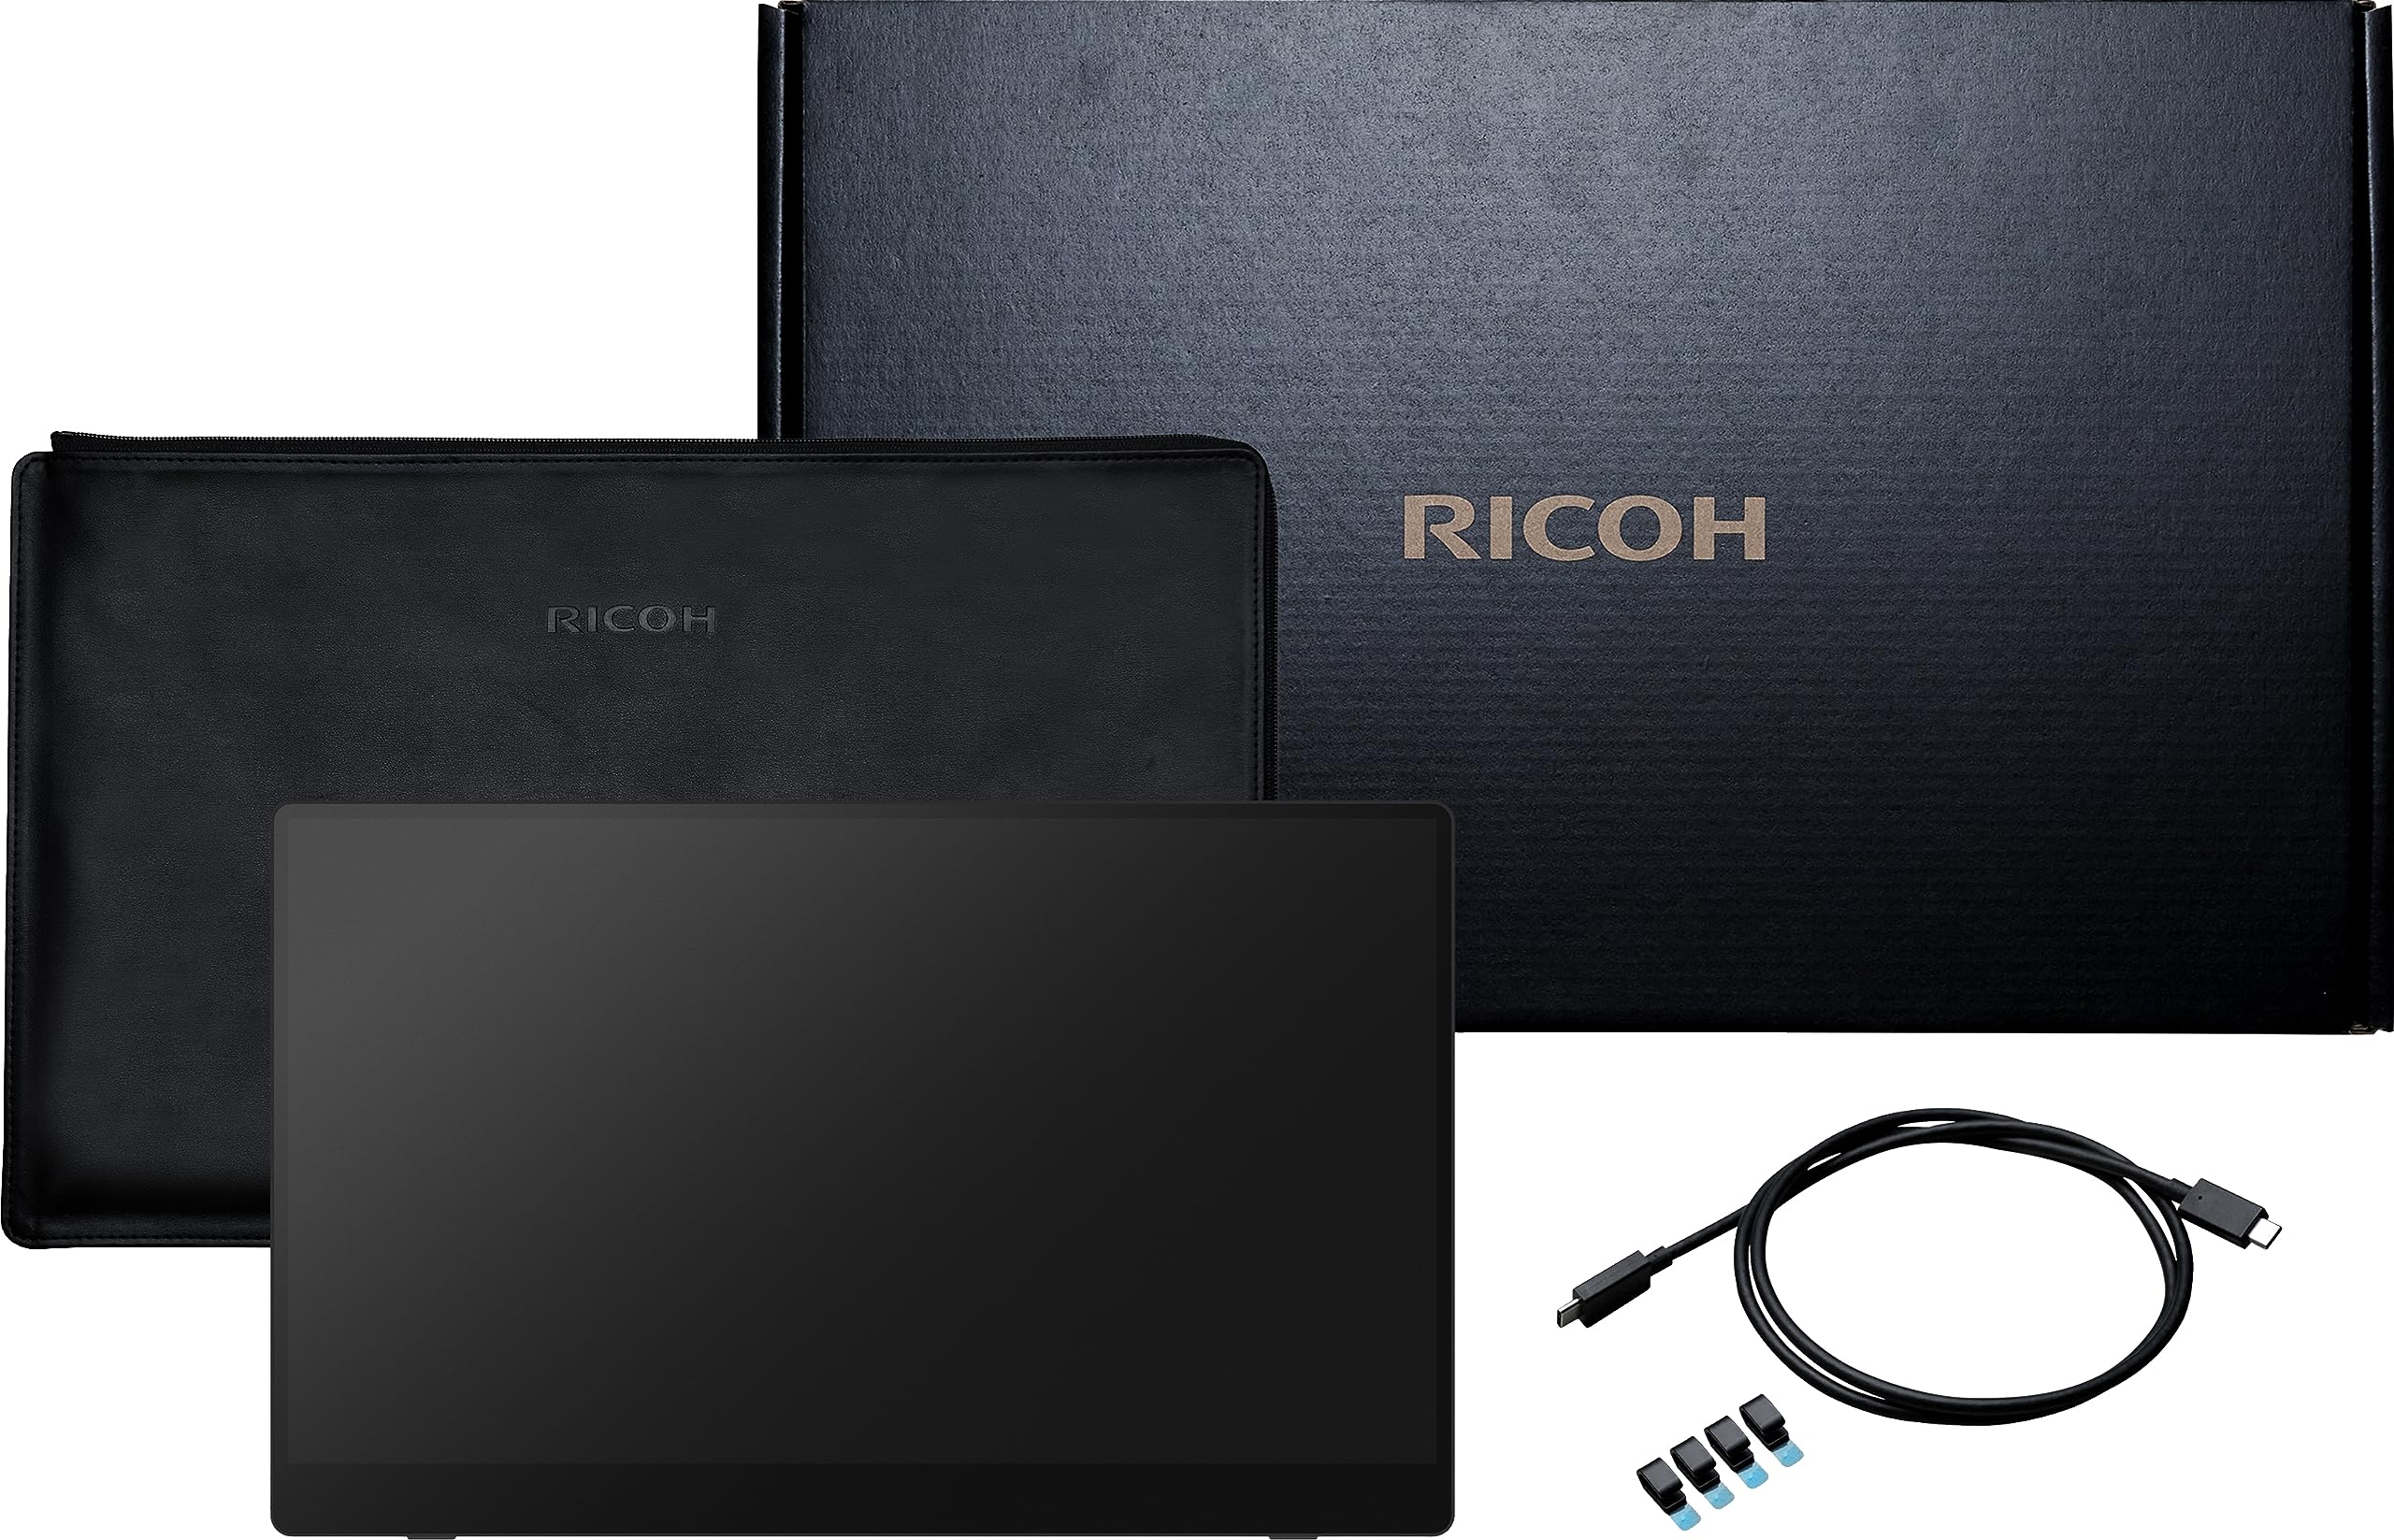 Ricoh 150BW Portable 15.6